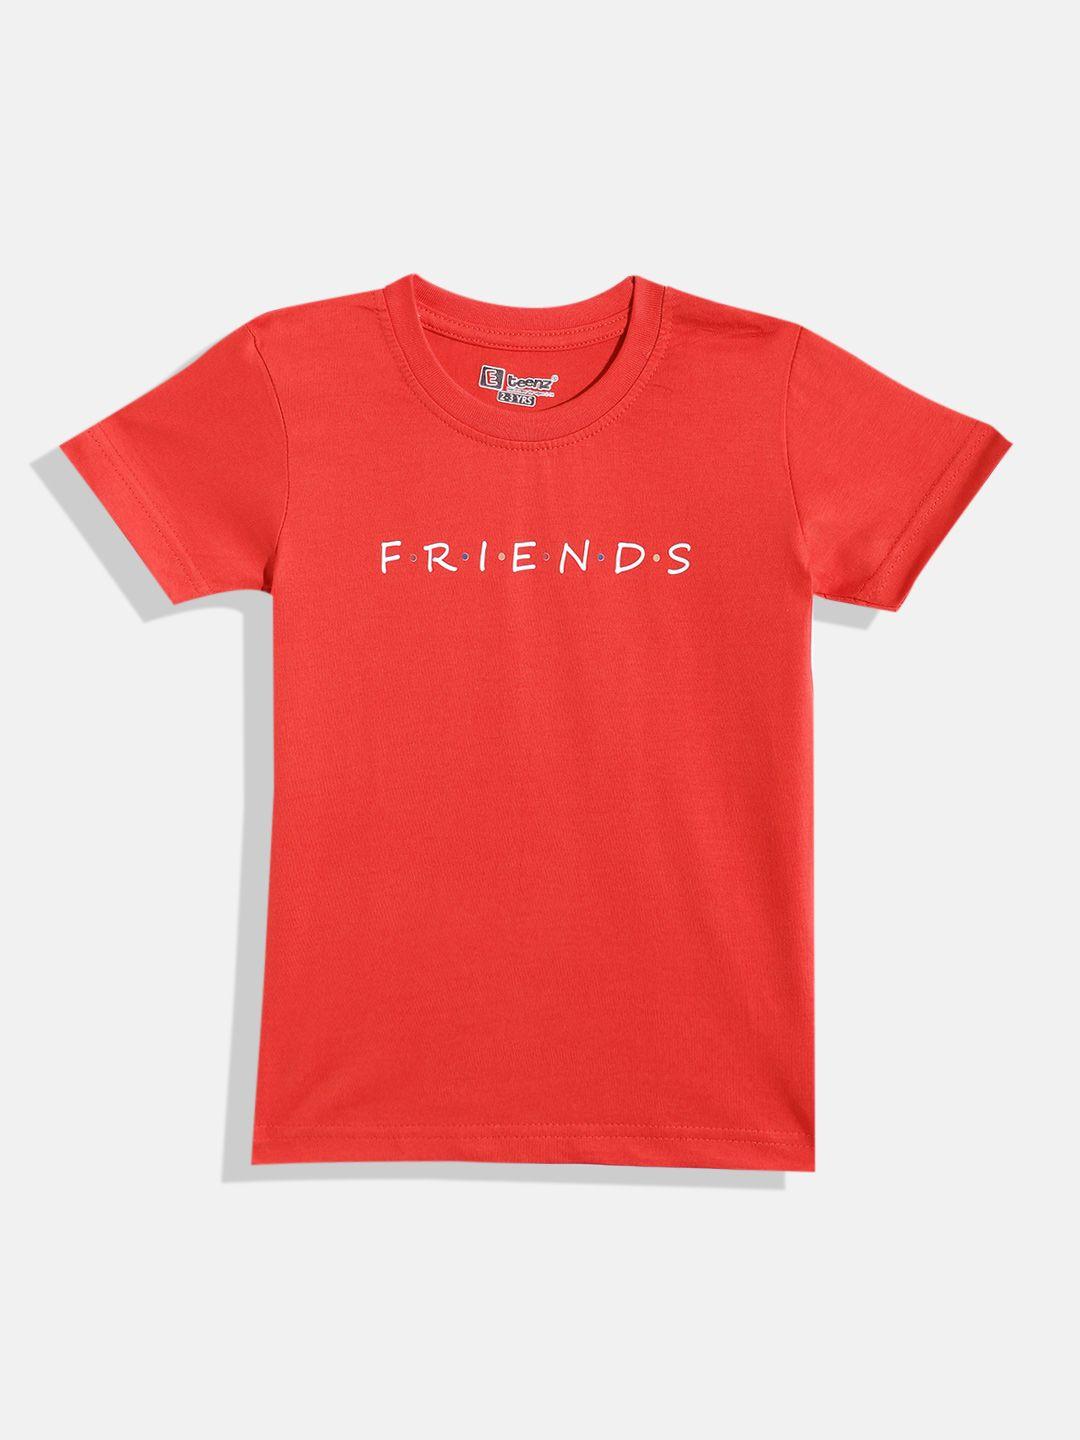 eteenz boys premium cotton friends printed t-shirt